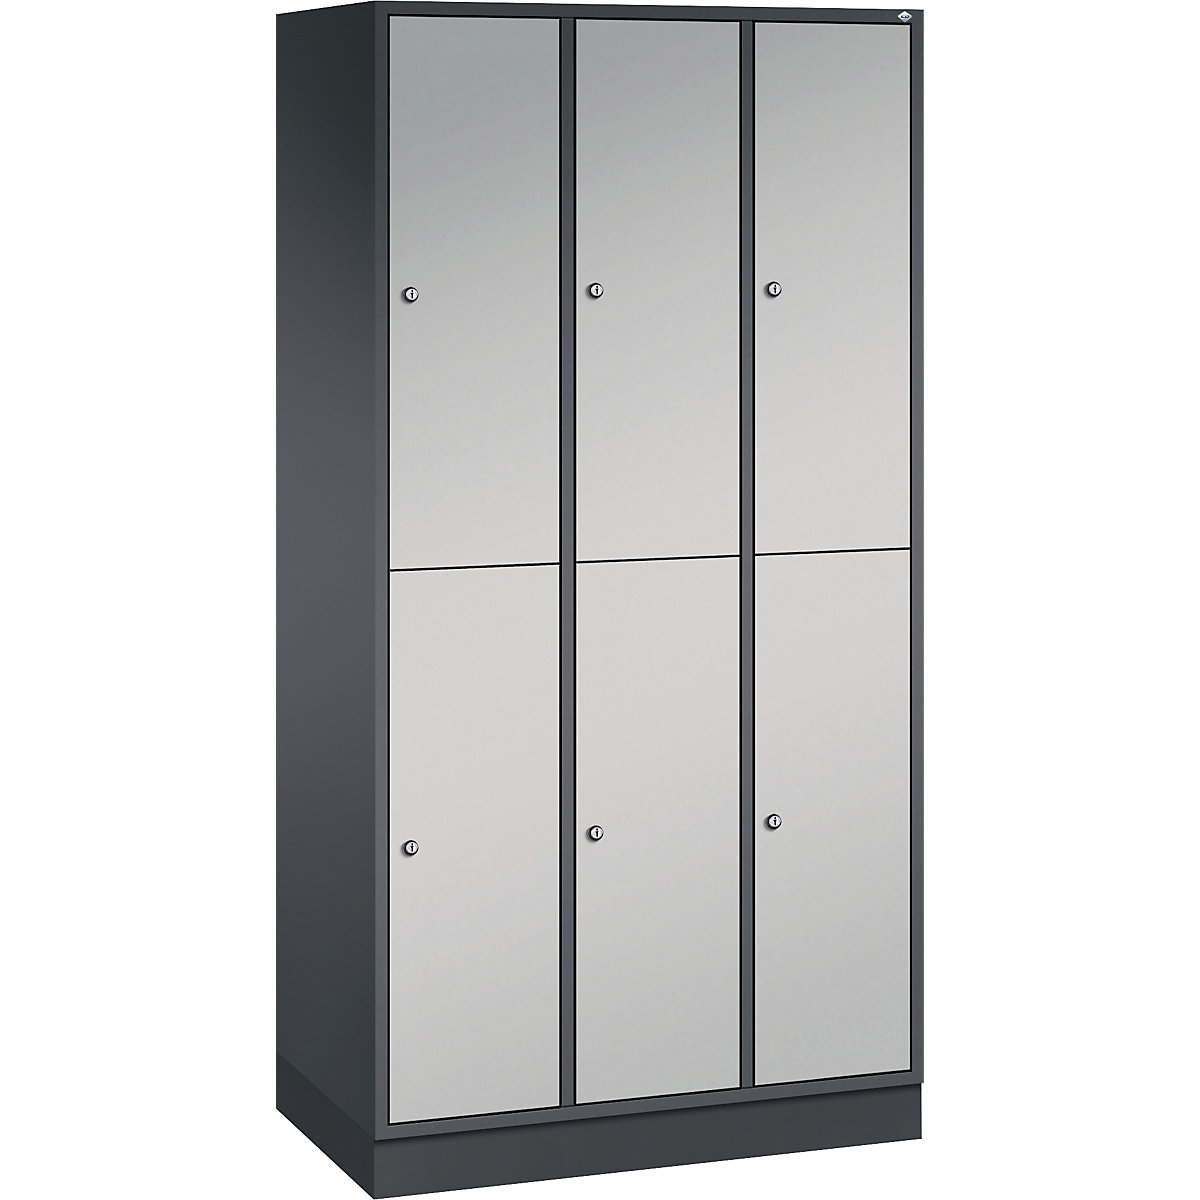 INTRO double tier steel cloakroom locker – C+P, WxD 920 x 500 mm, 6 compartments, black grey body, white aluminium doors